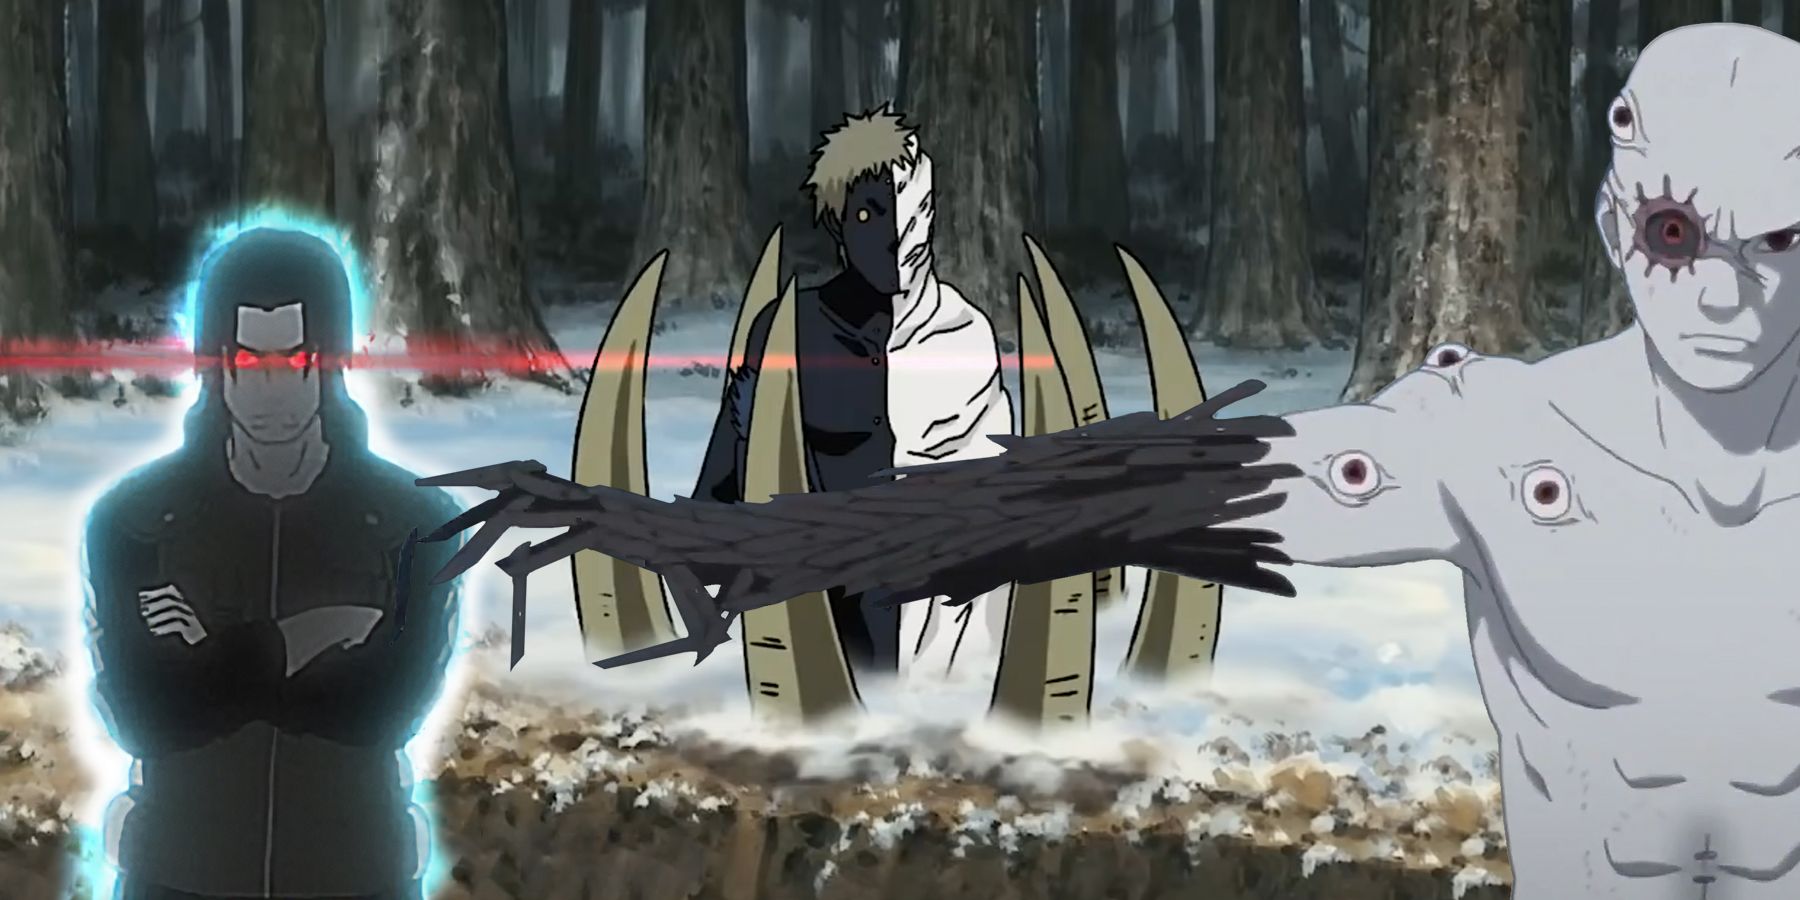 eternal mangekyou sharingan sasuke naruto ultimate ninja storm 3